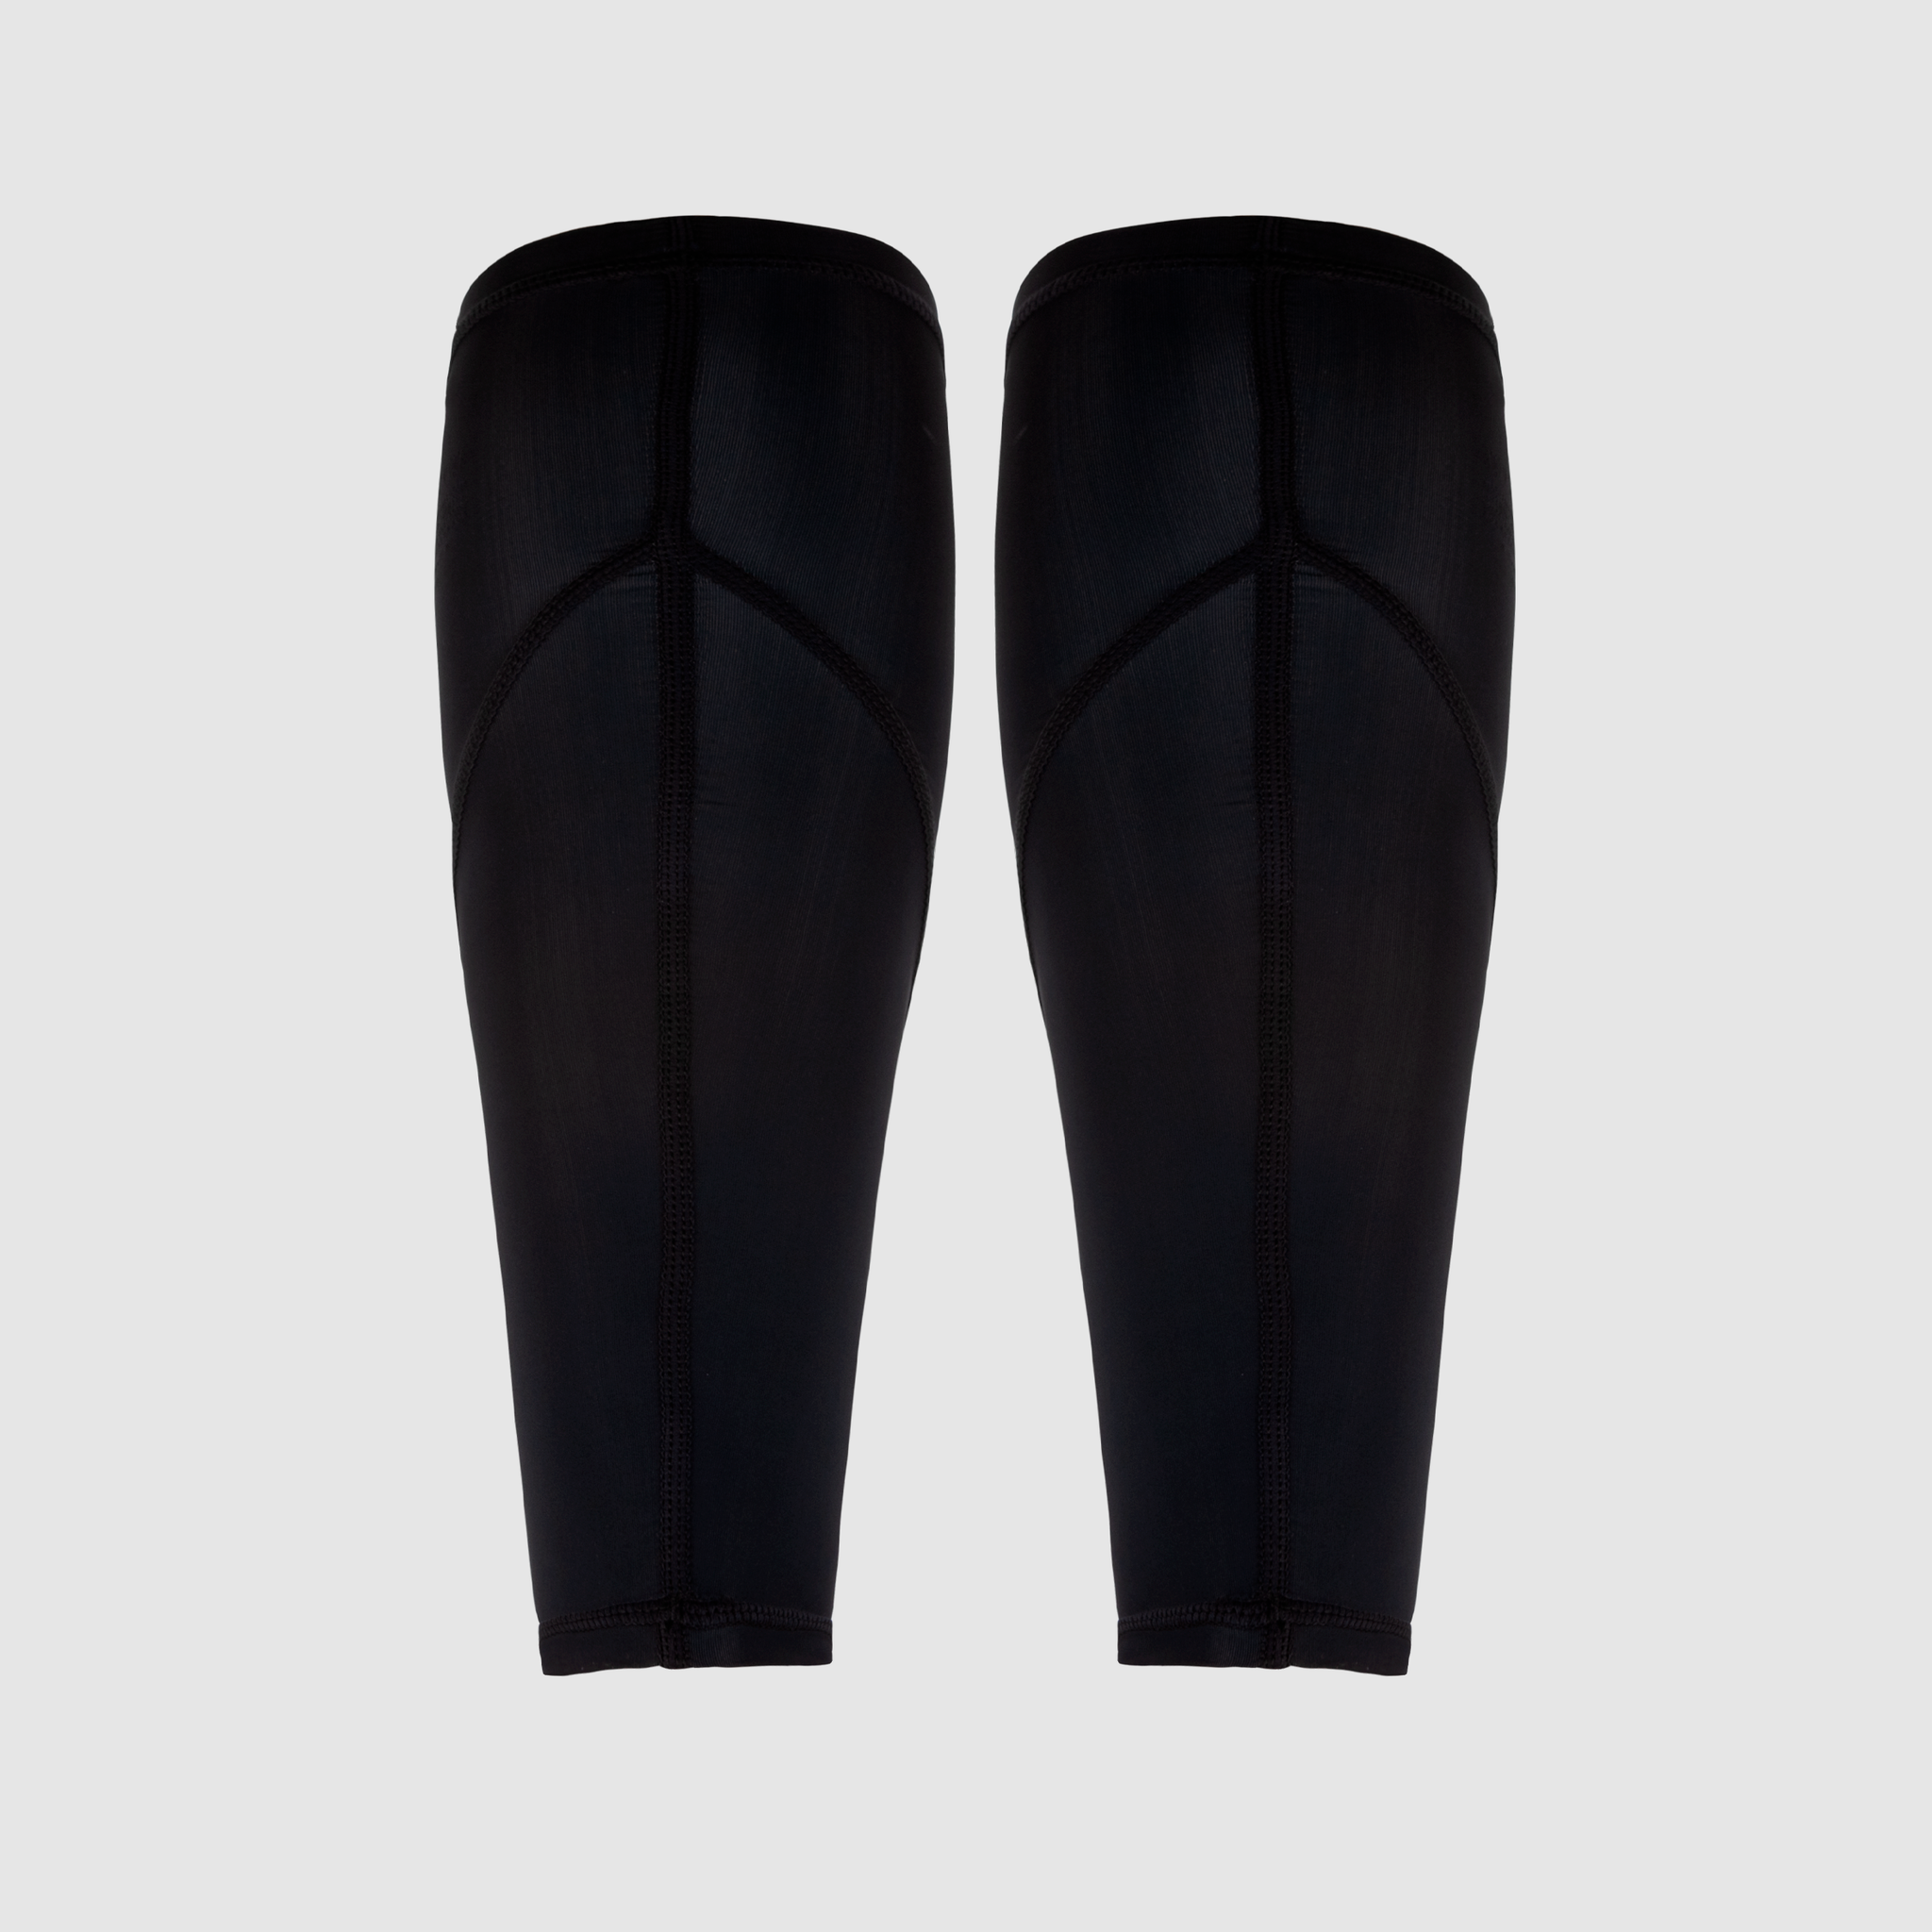 CRX Black Elite Compression Calf Sleeves – VX3